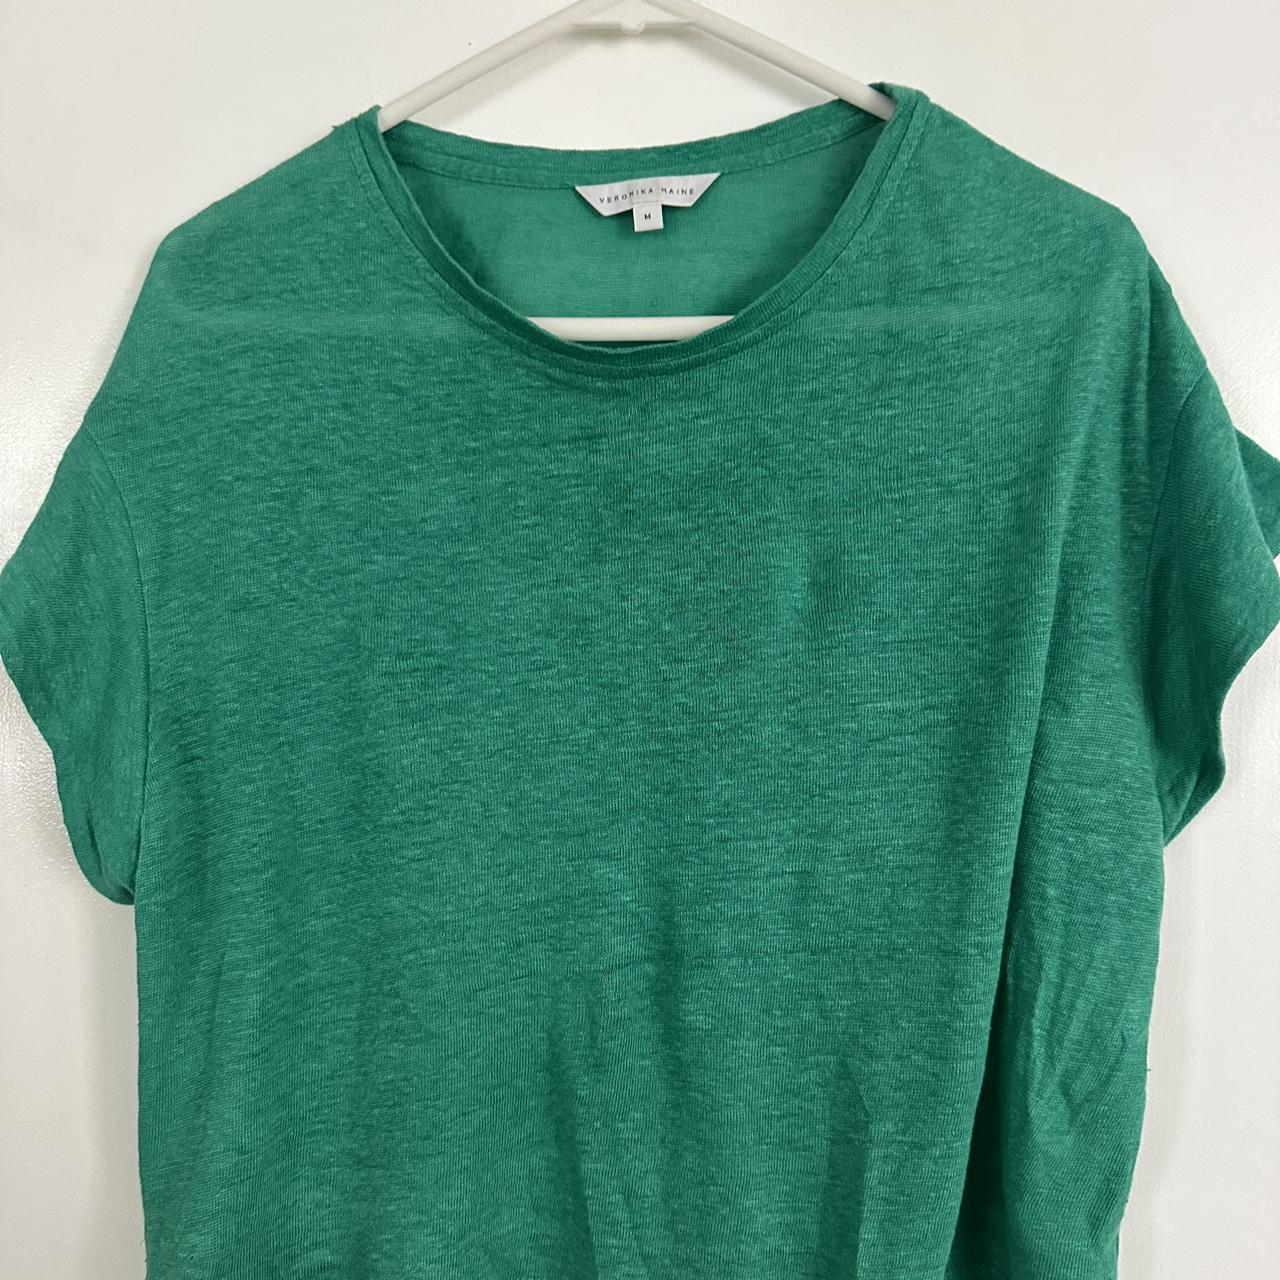 Veronika Maine linen green shirt in M Slightly... - Depop